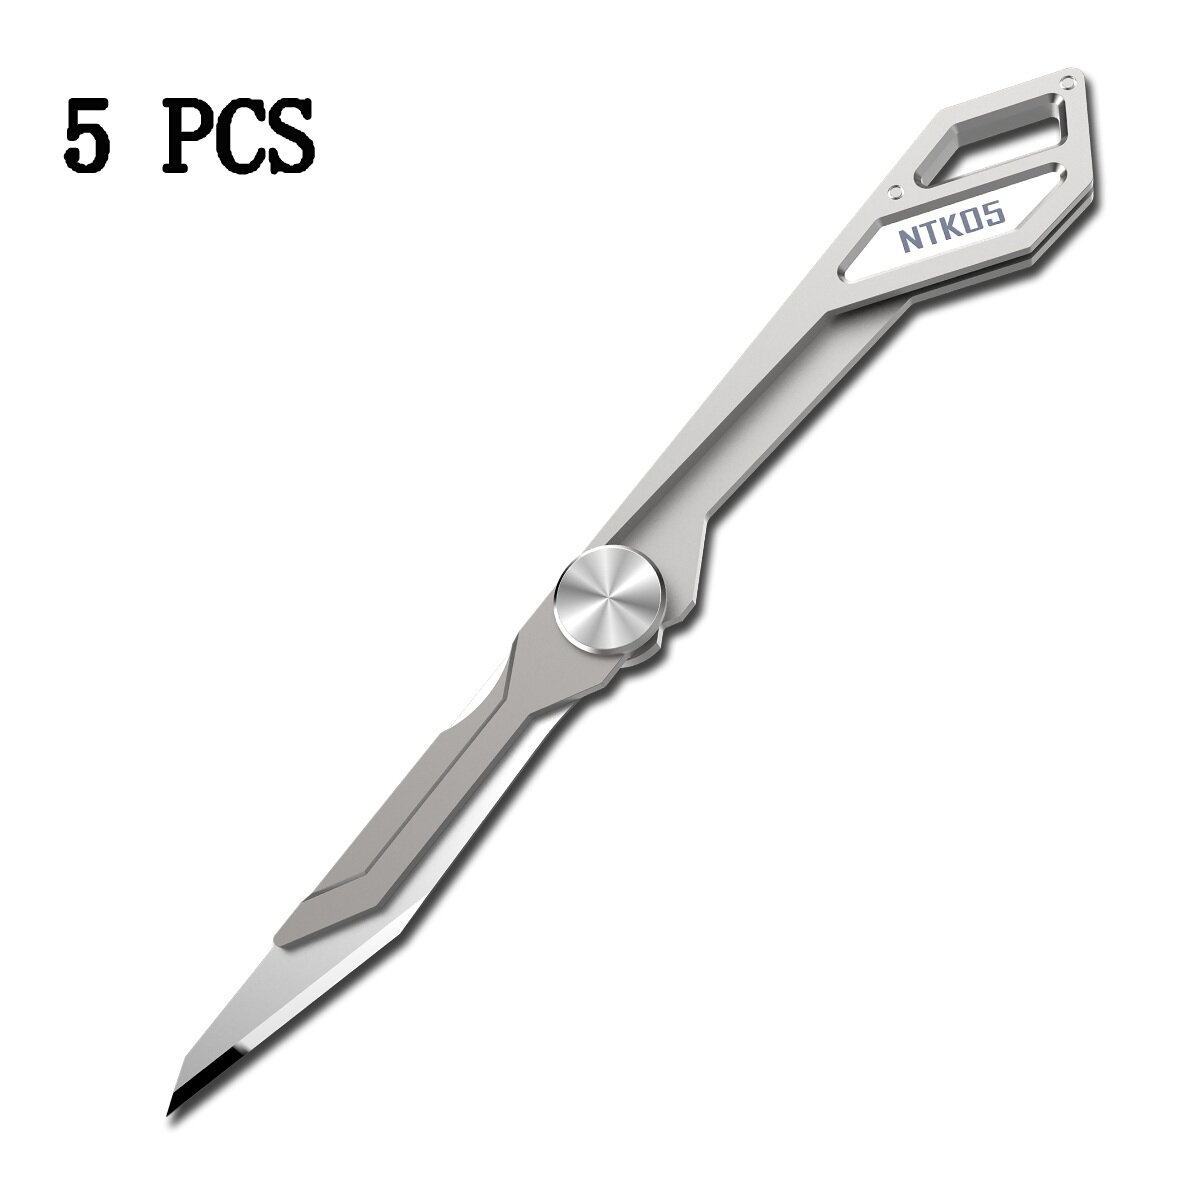 5 PCS NITECORE NTKO5 97mm TC4 Knife Titanium Alloy Ultralight Folding EDC Knife Keychain Pocket Knife